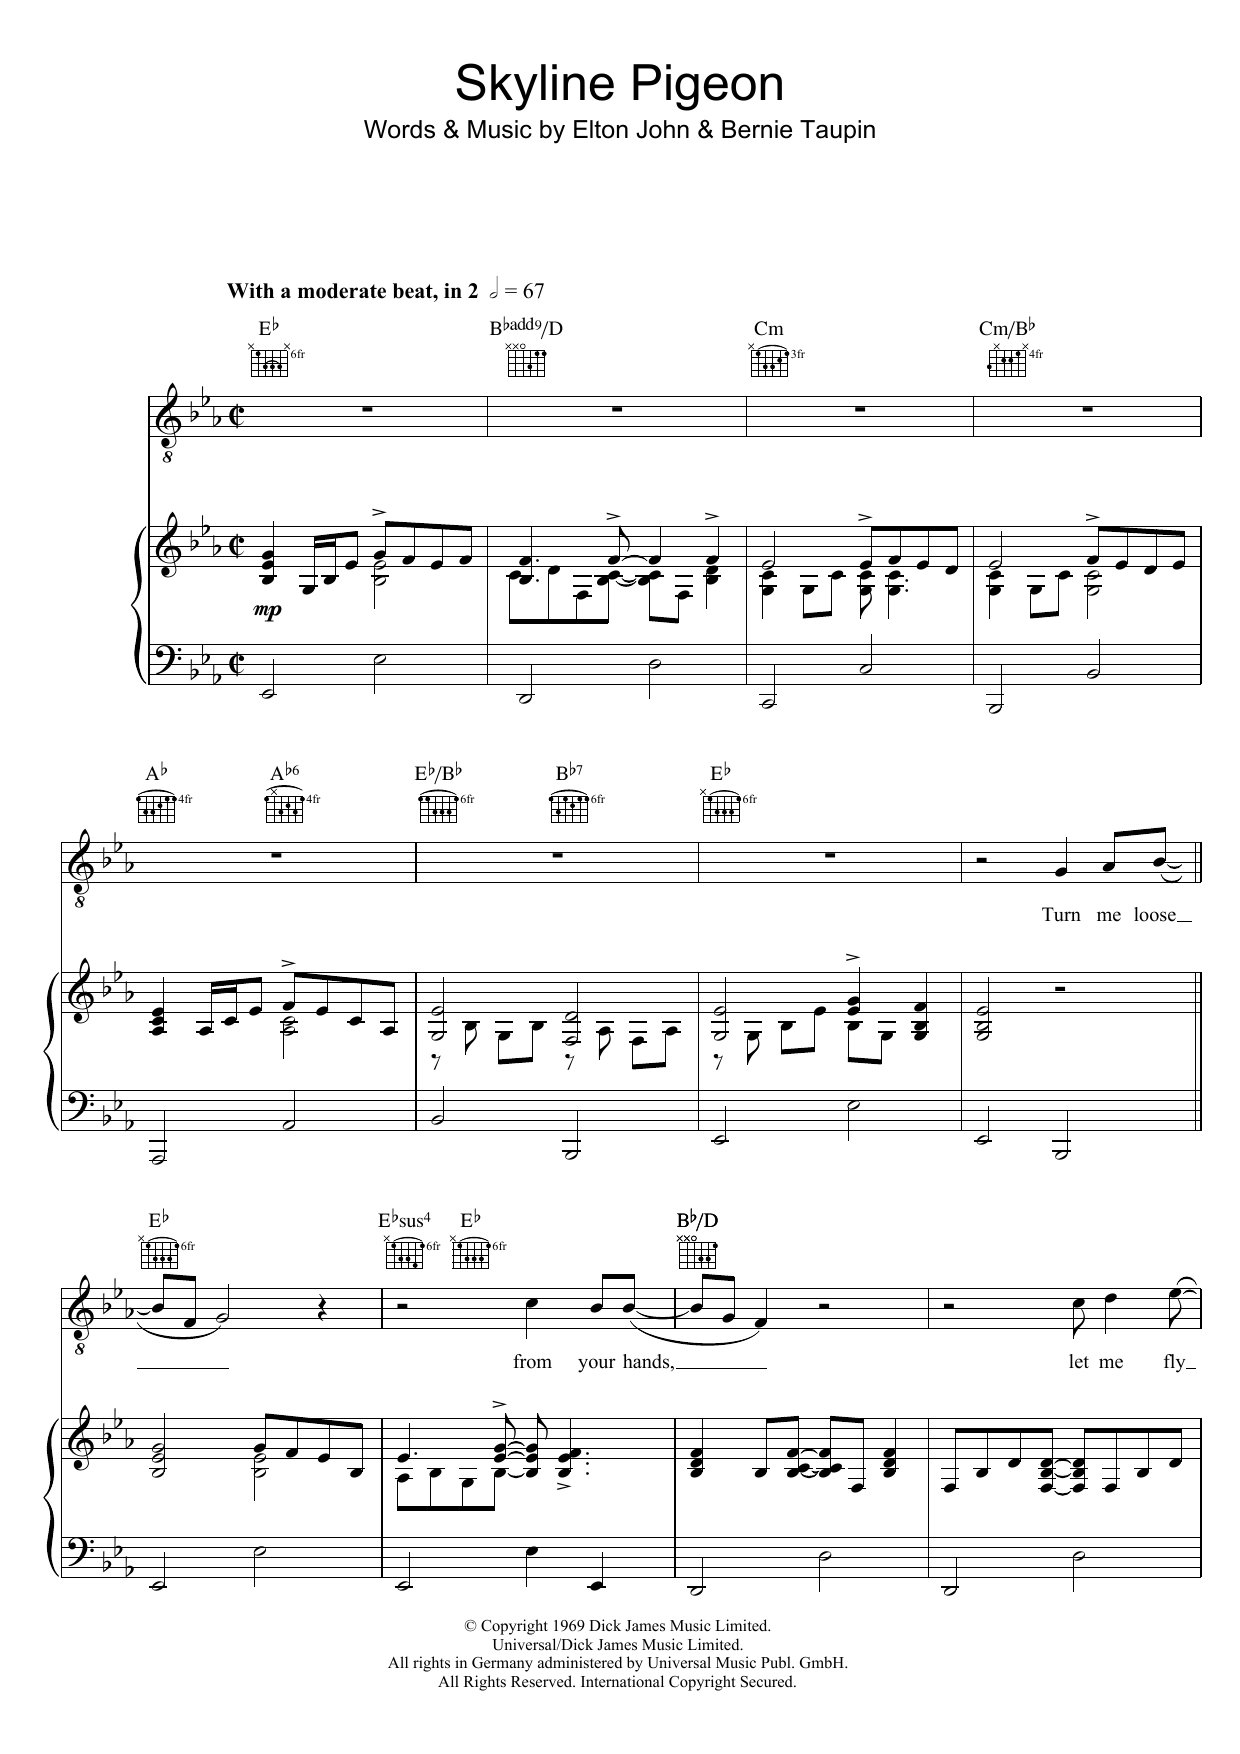 Elton John Skyline Pigeon Sheet Music Notes & Chords for Melody Line, Lyrics & Chords - Download or Print PDF